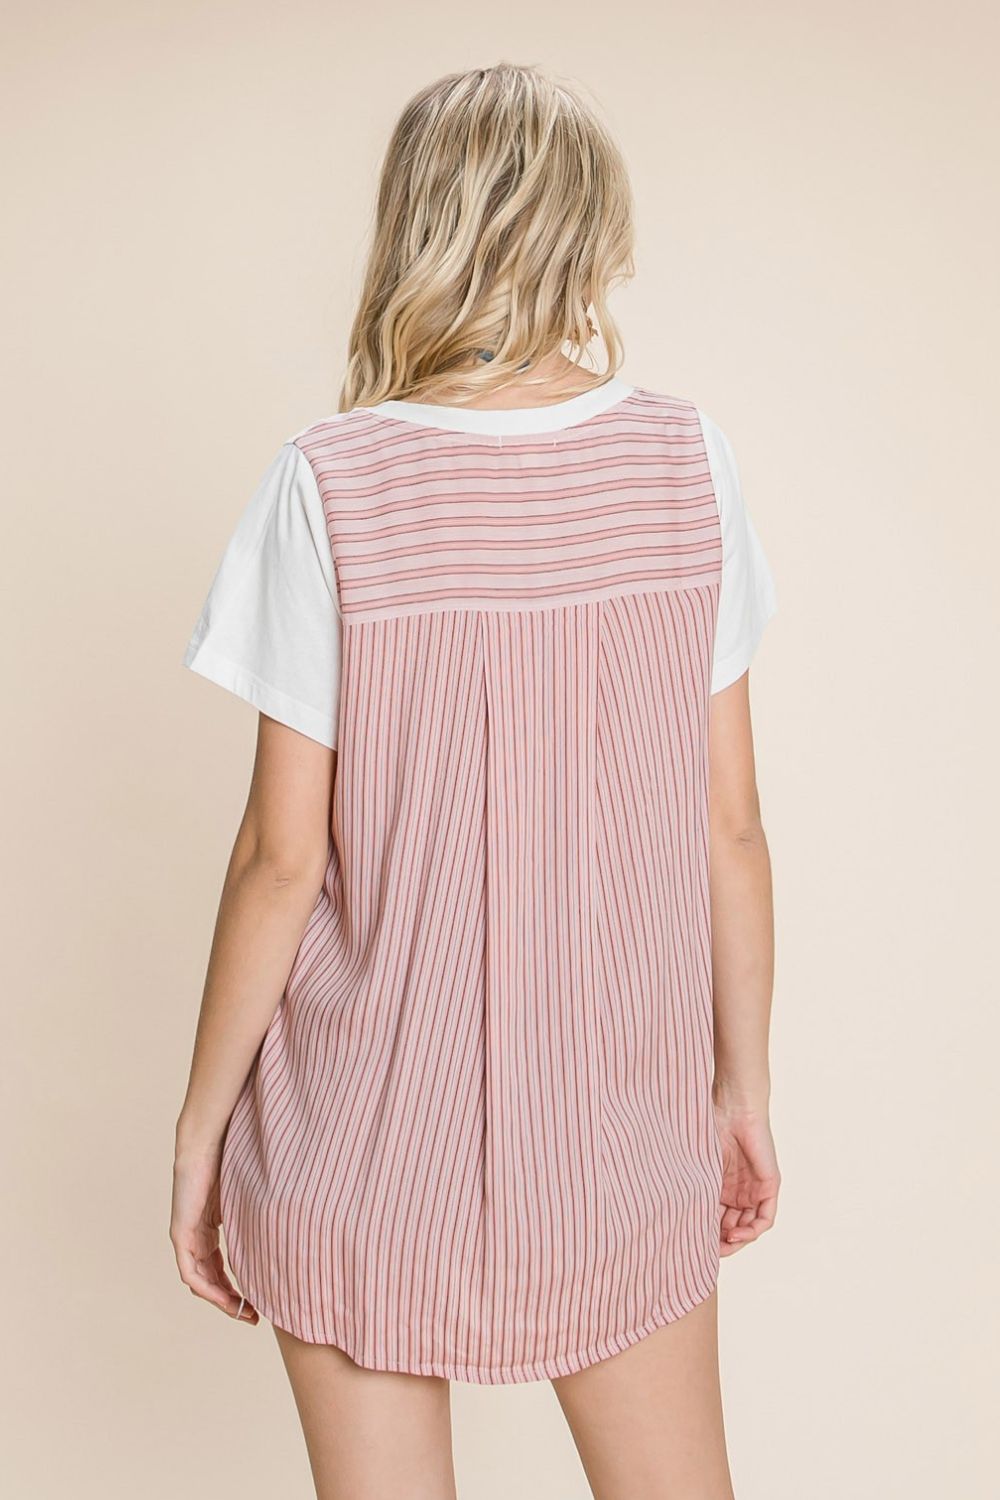 Cotton Bleu by Nu Label Contrast Striped Short Sleeve T-Shirt Trendsi